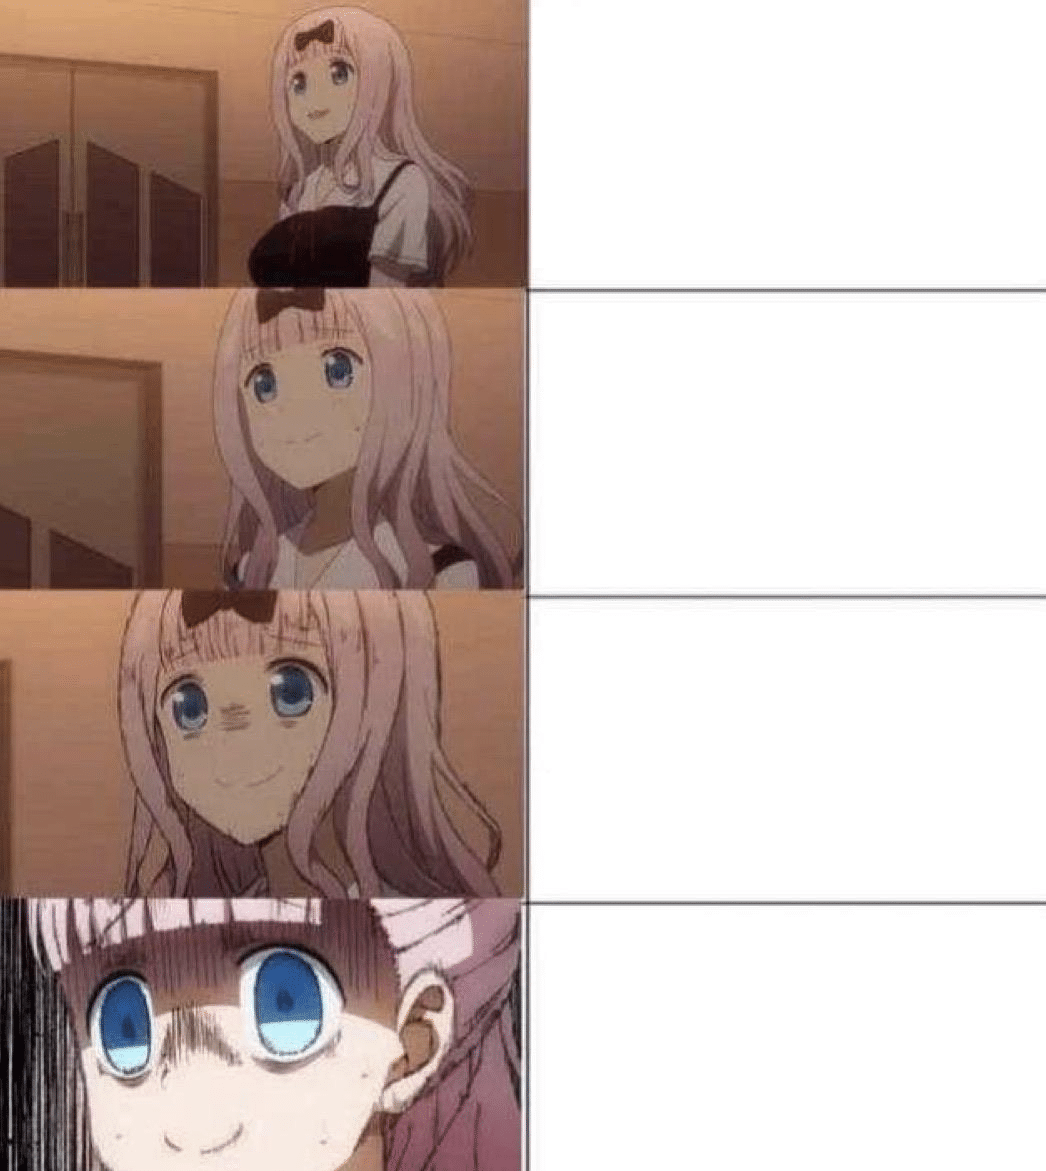 Meme Generator - Pink haired anime girl reacting - Newfa Stuff